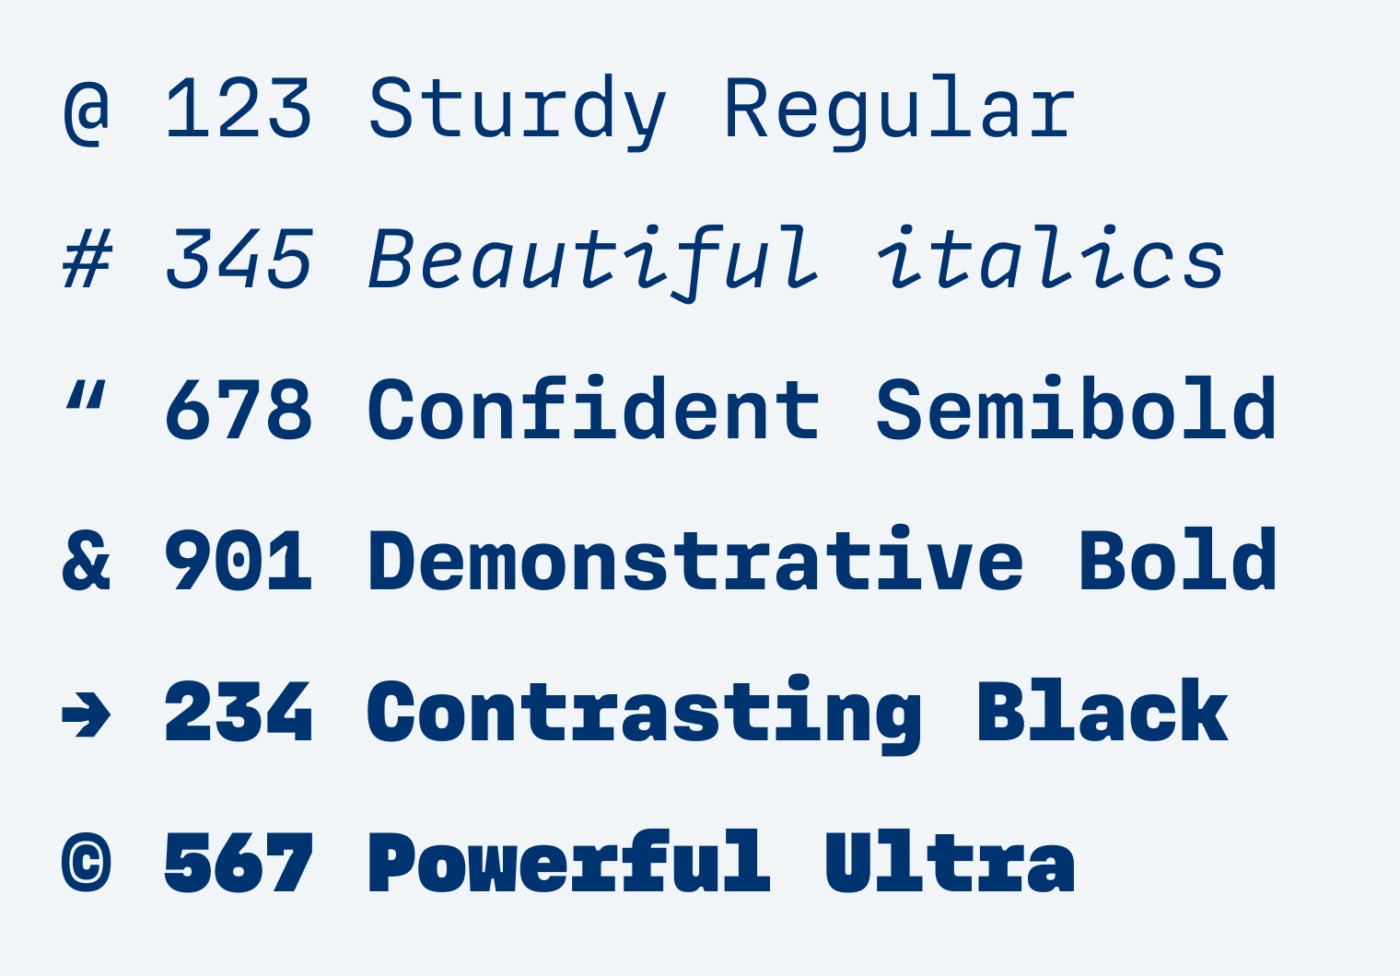 Sturdy Regular, Beautiful italics, Confident Semibold, Demonstrative Bold, Contrasting Black, Powerful Ultra